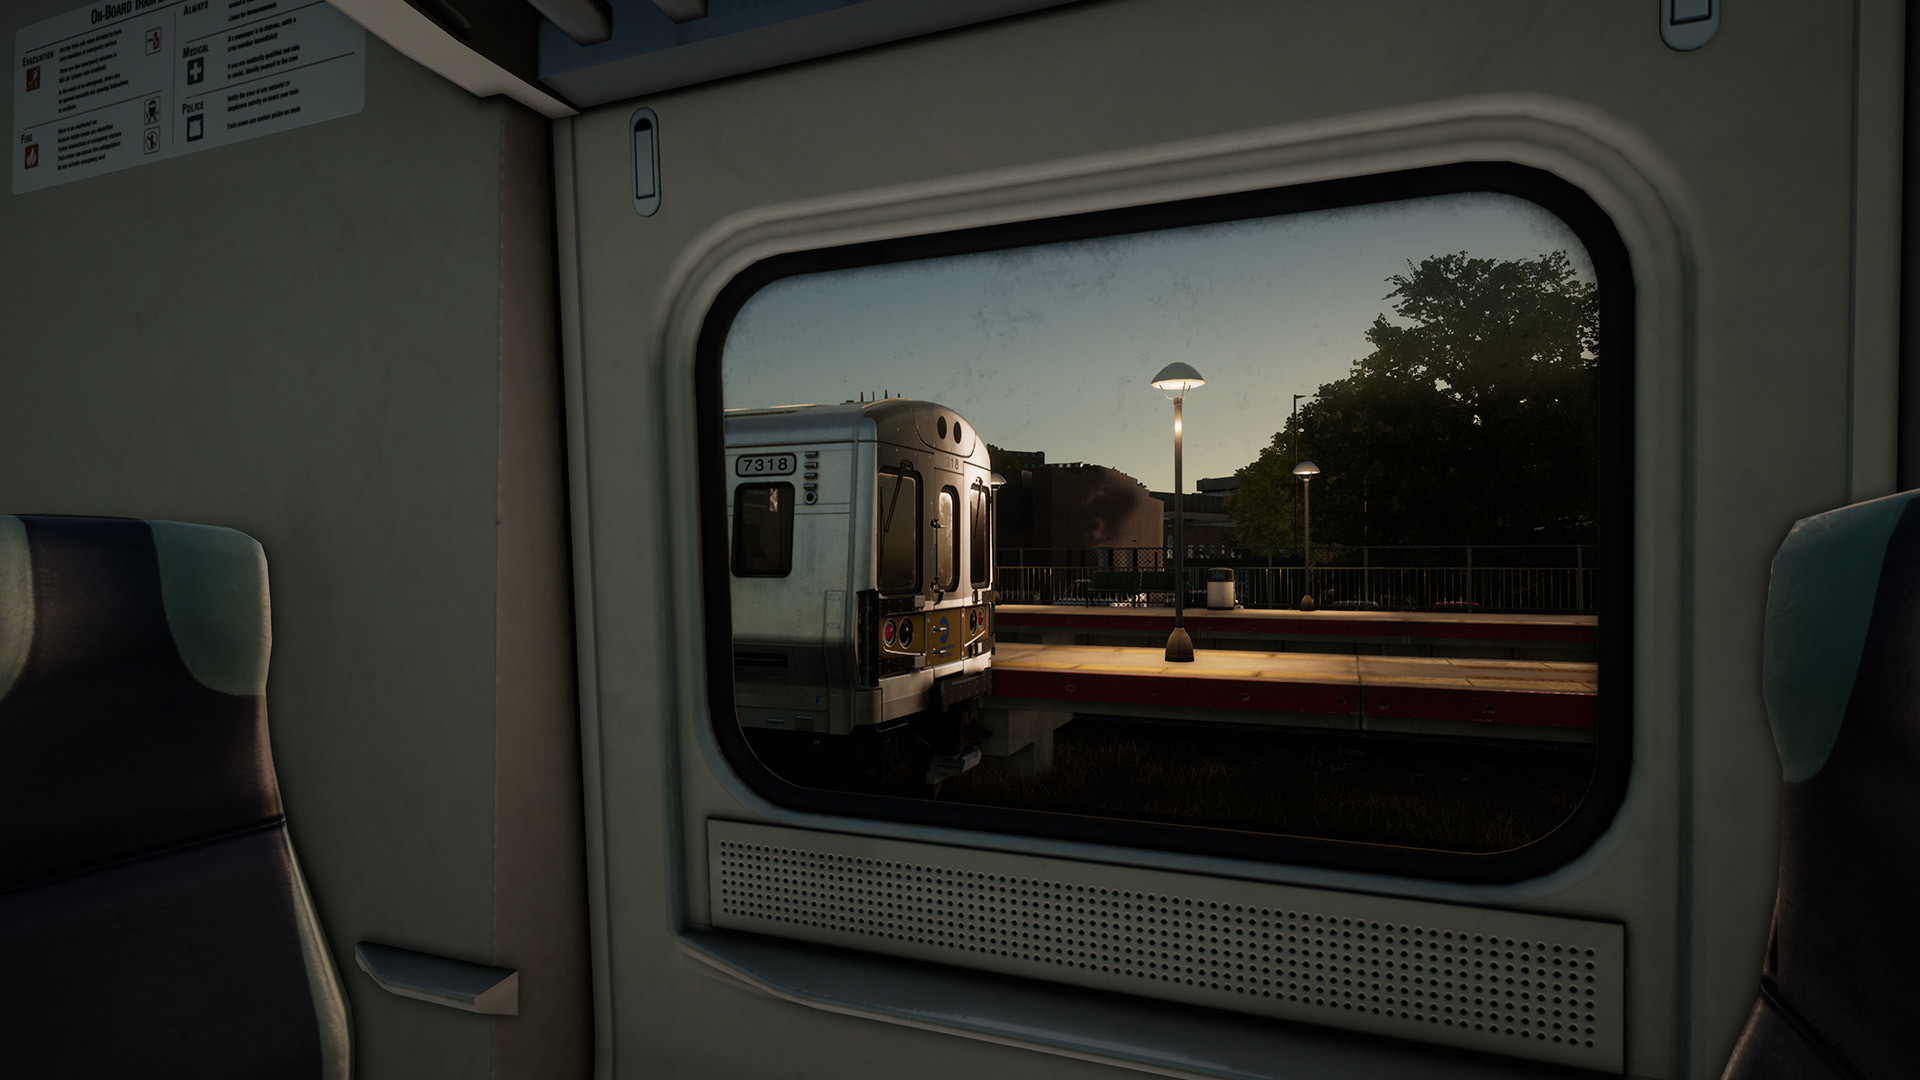 Train Sim World 2: Long Island Rail Road: New York - Hicksville Route Add-On DLC Steam CD Key 5.63 $